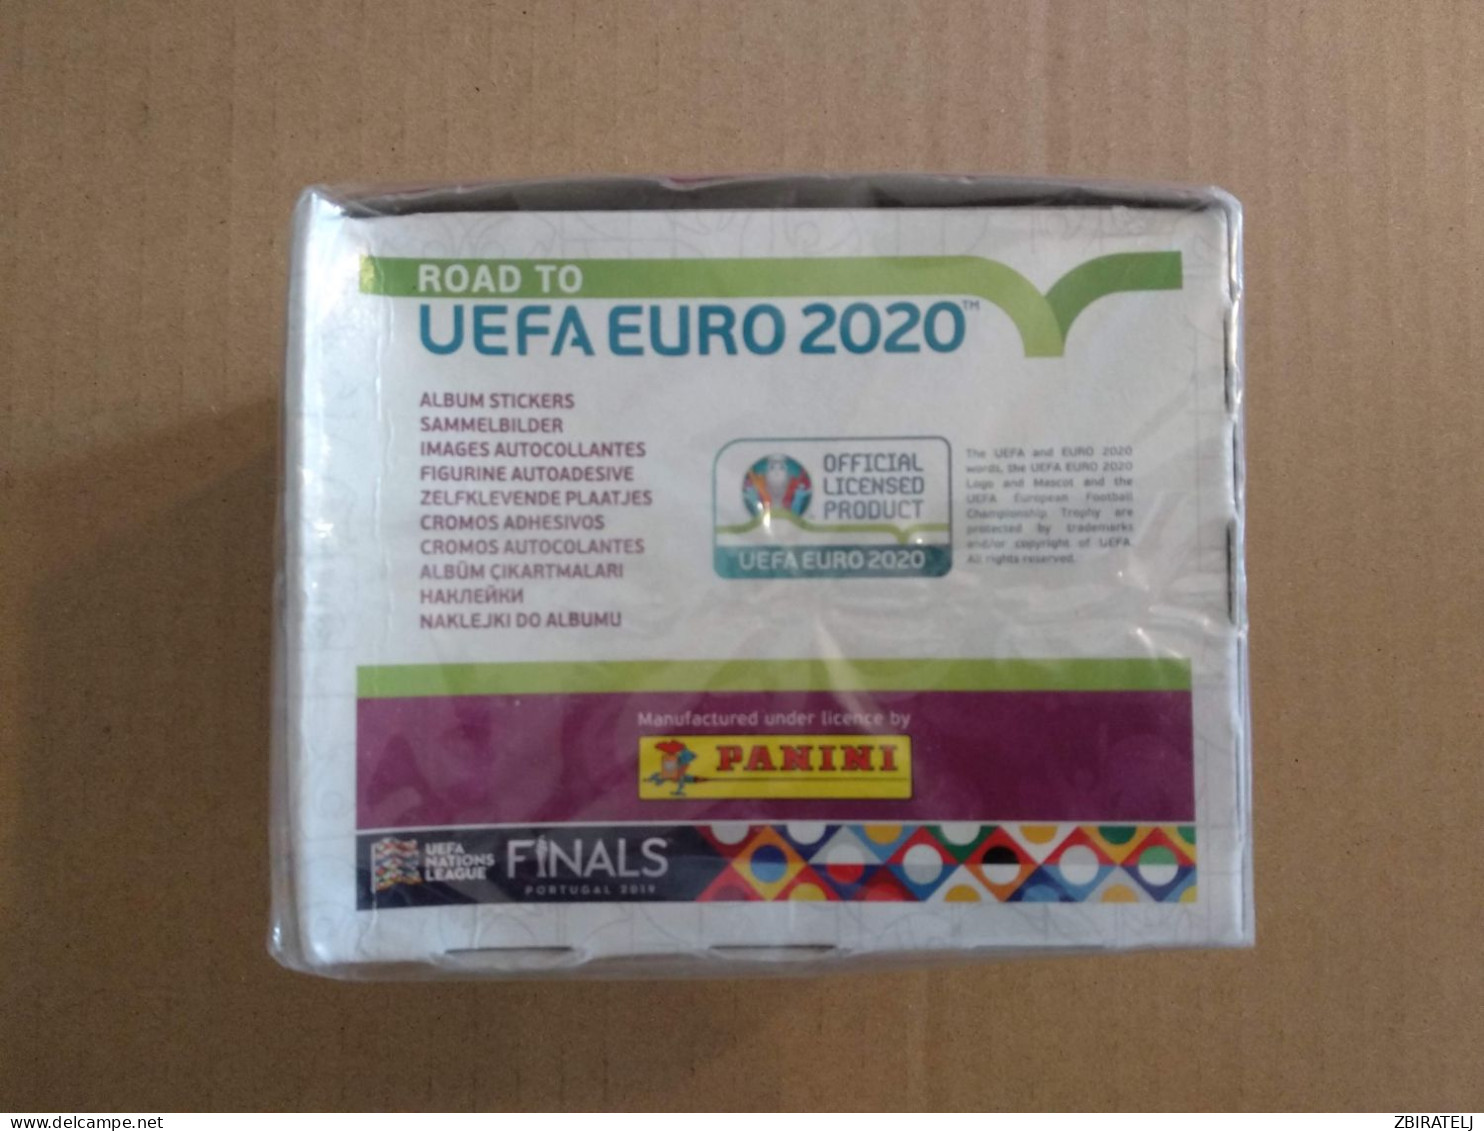 PANINI ROAD TO 2020 UEFA EURO DISPLAY - 50 PACKS - 250 STICKERS - Englische Ausgabe